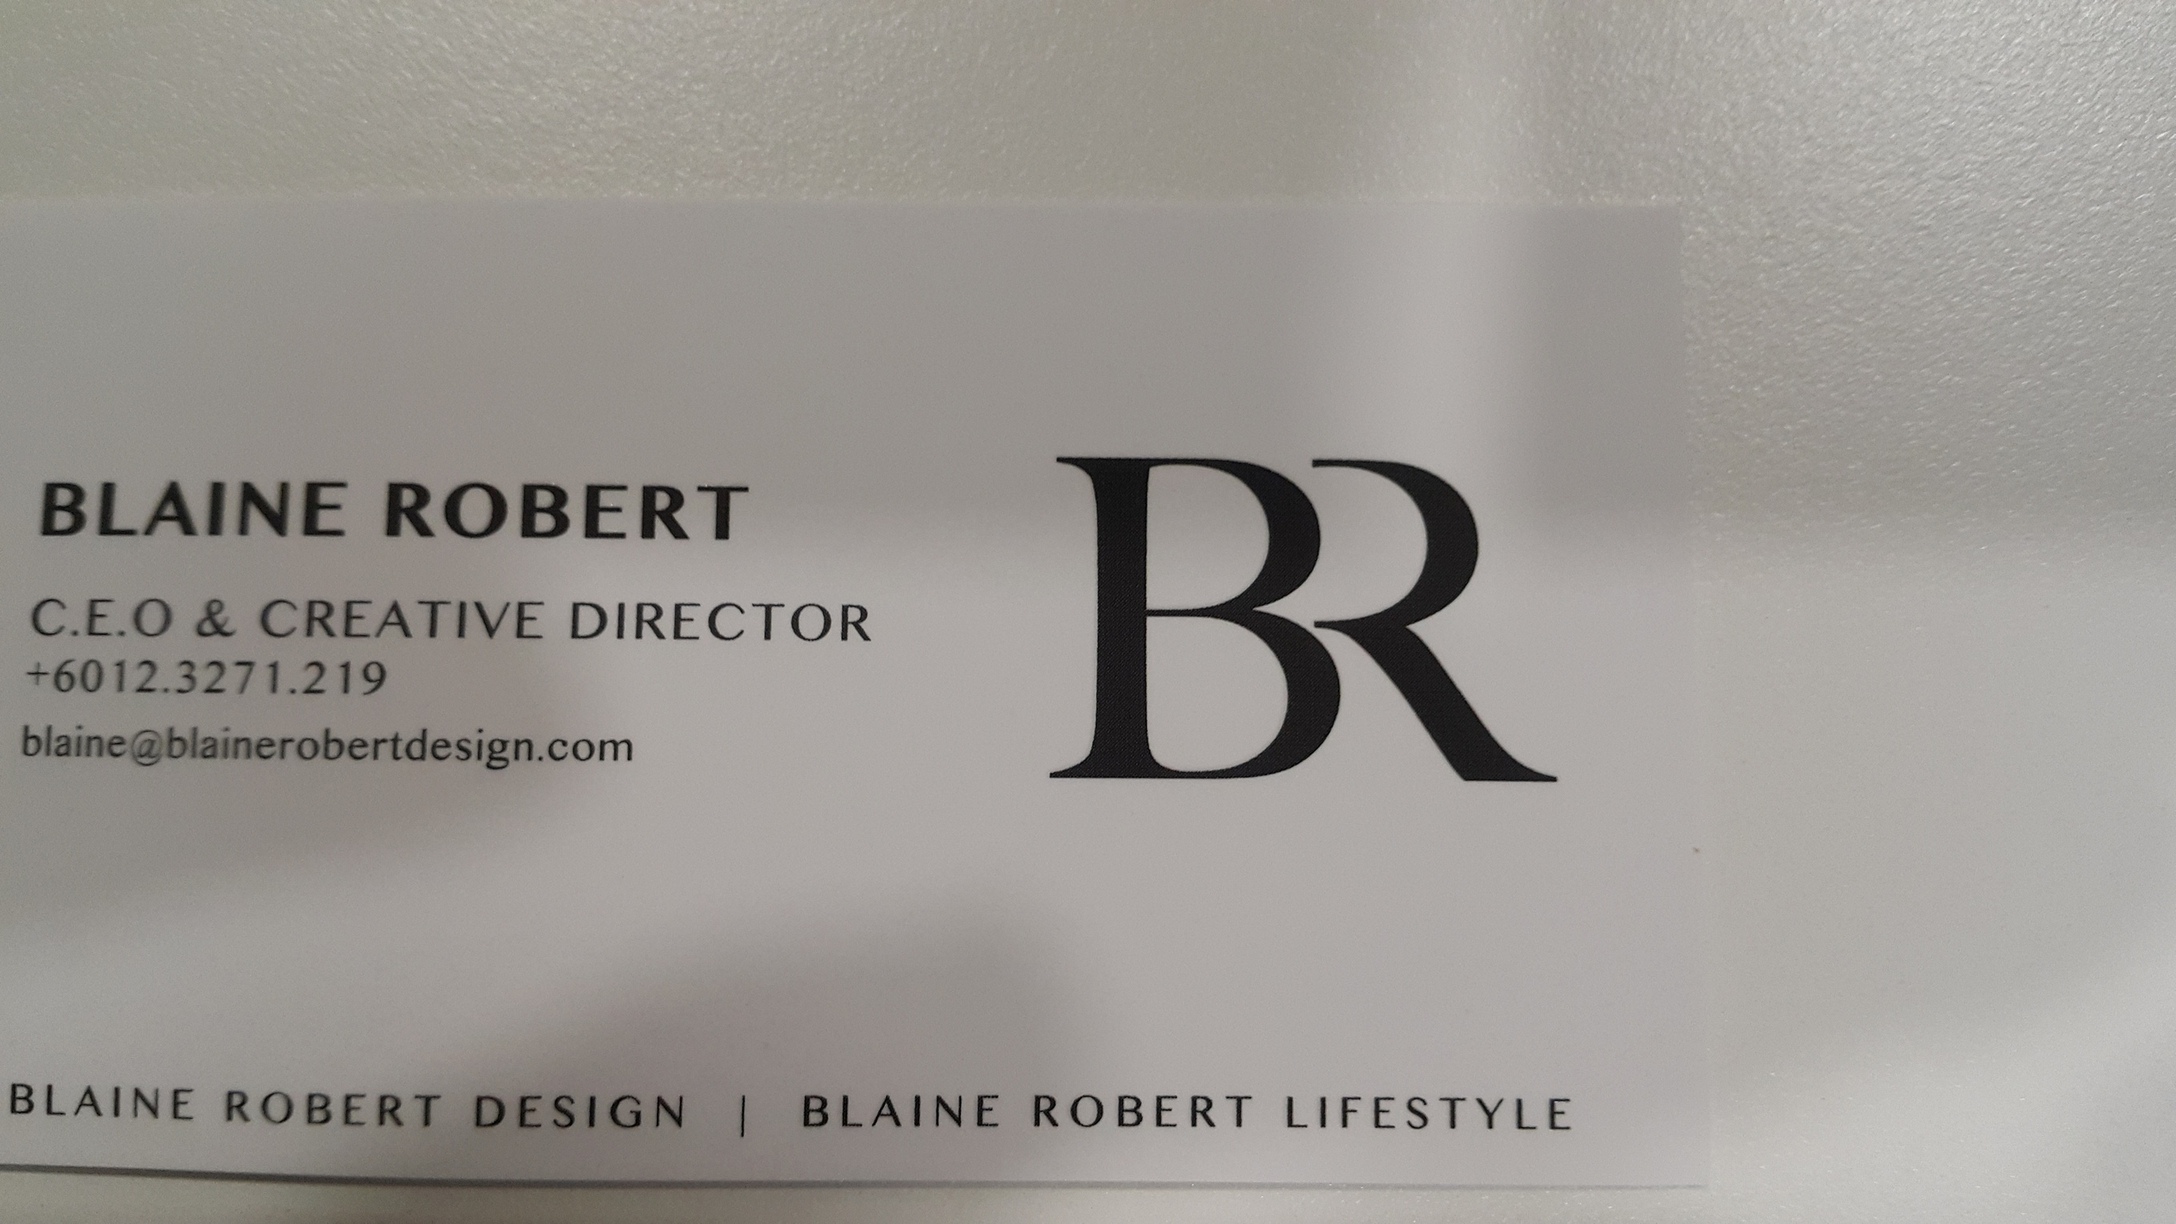 Blaine Robert Design Sdn. Bhd.